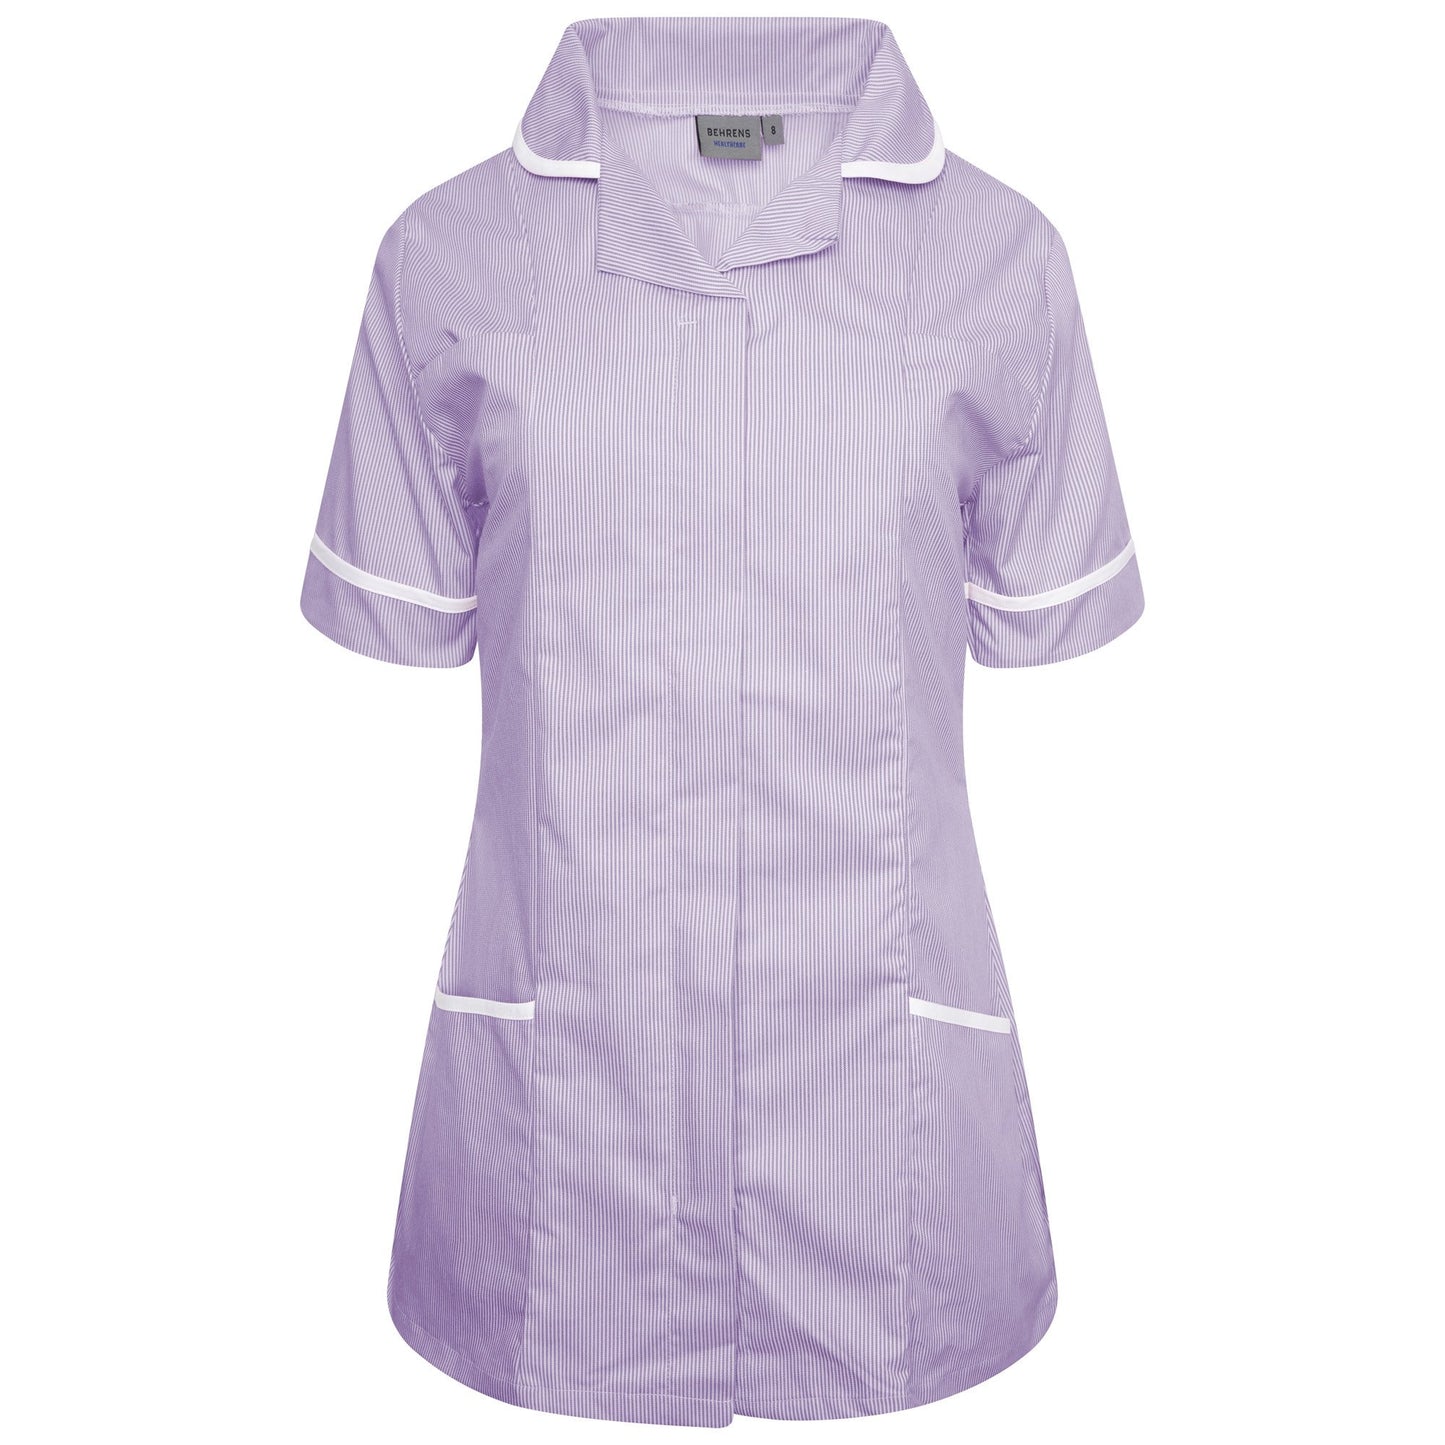 Behrens Striped Women's Healthcare Nurses Tunic - NCLTPS Lilac/White Stripe/White Trim UK 8